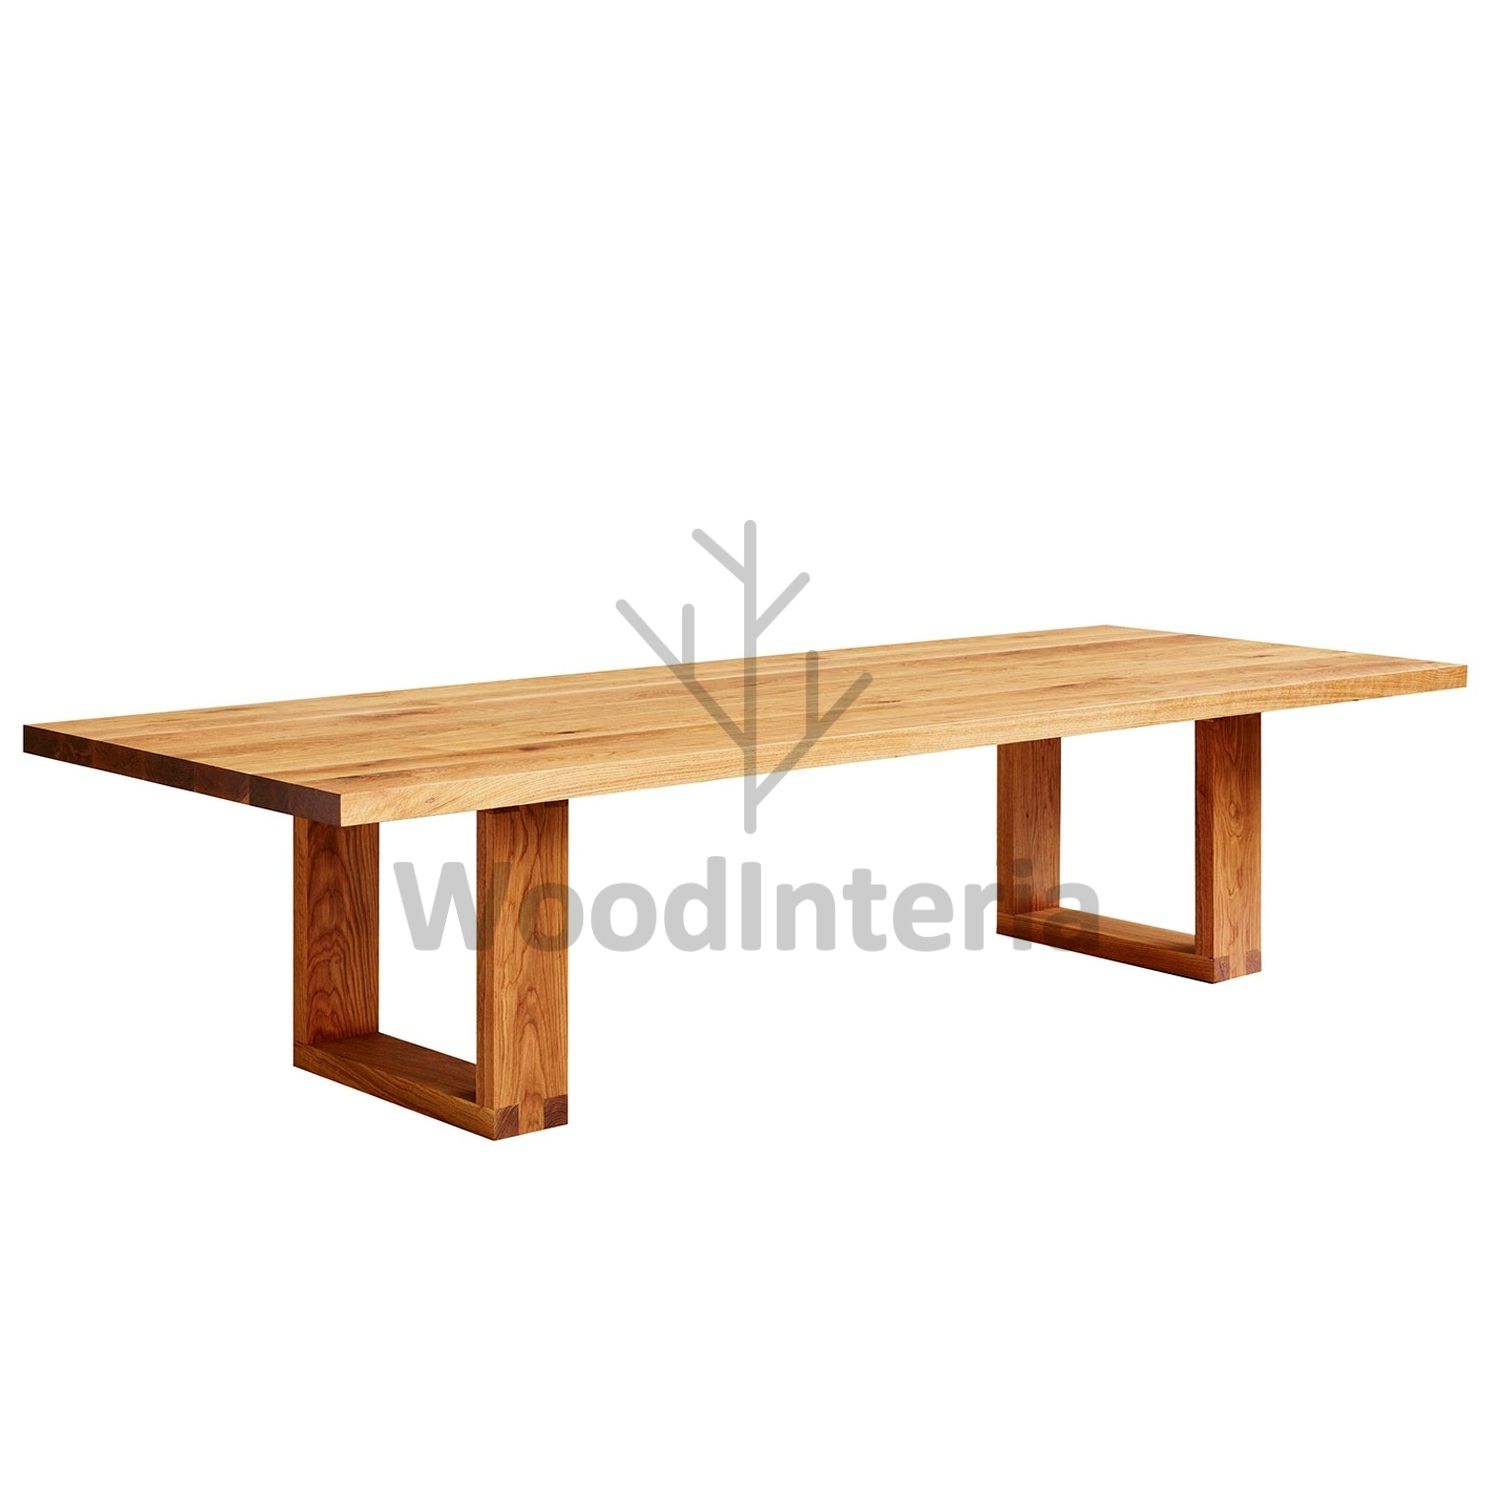 фото стол обеденный live edge mackenzie в интерьере лофт эко | WoodInteria